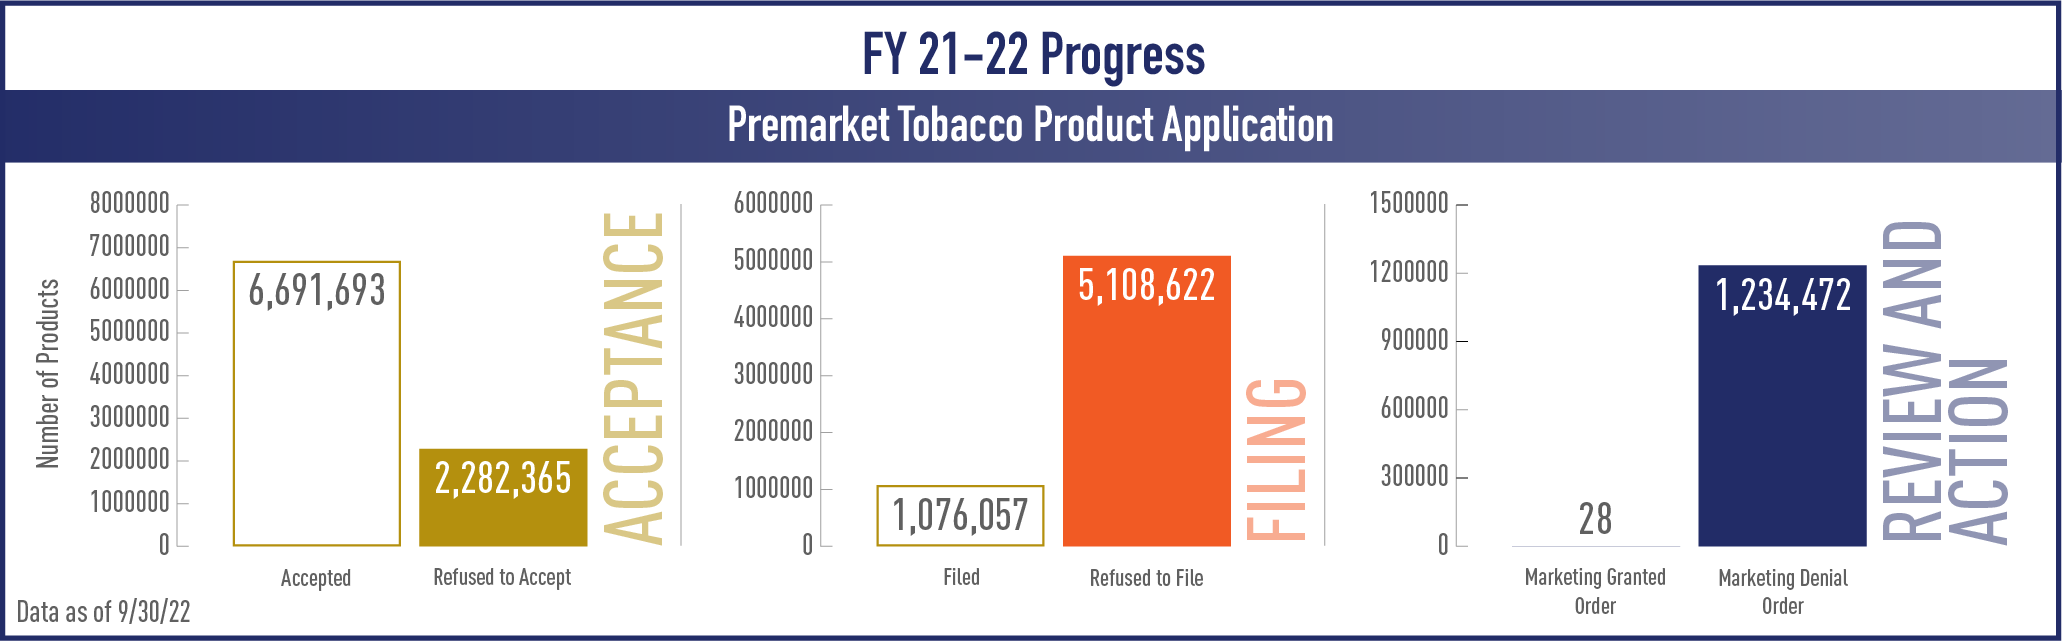 premarket tobacco product applications bar graph